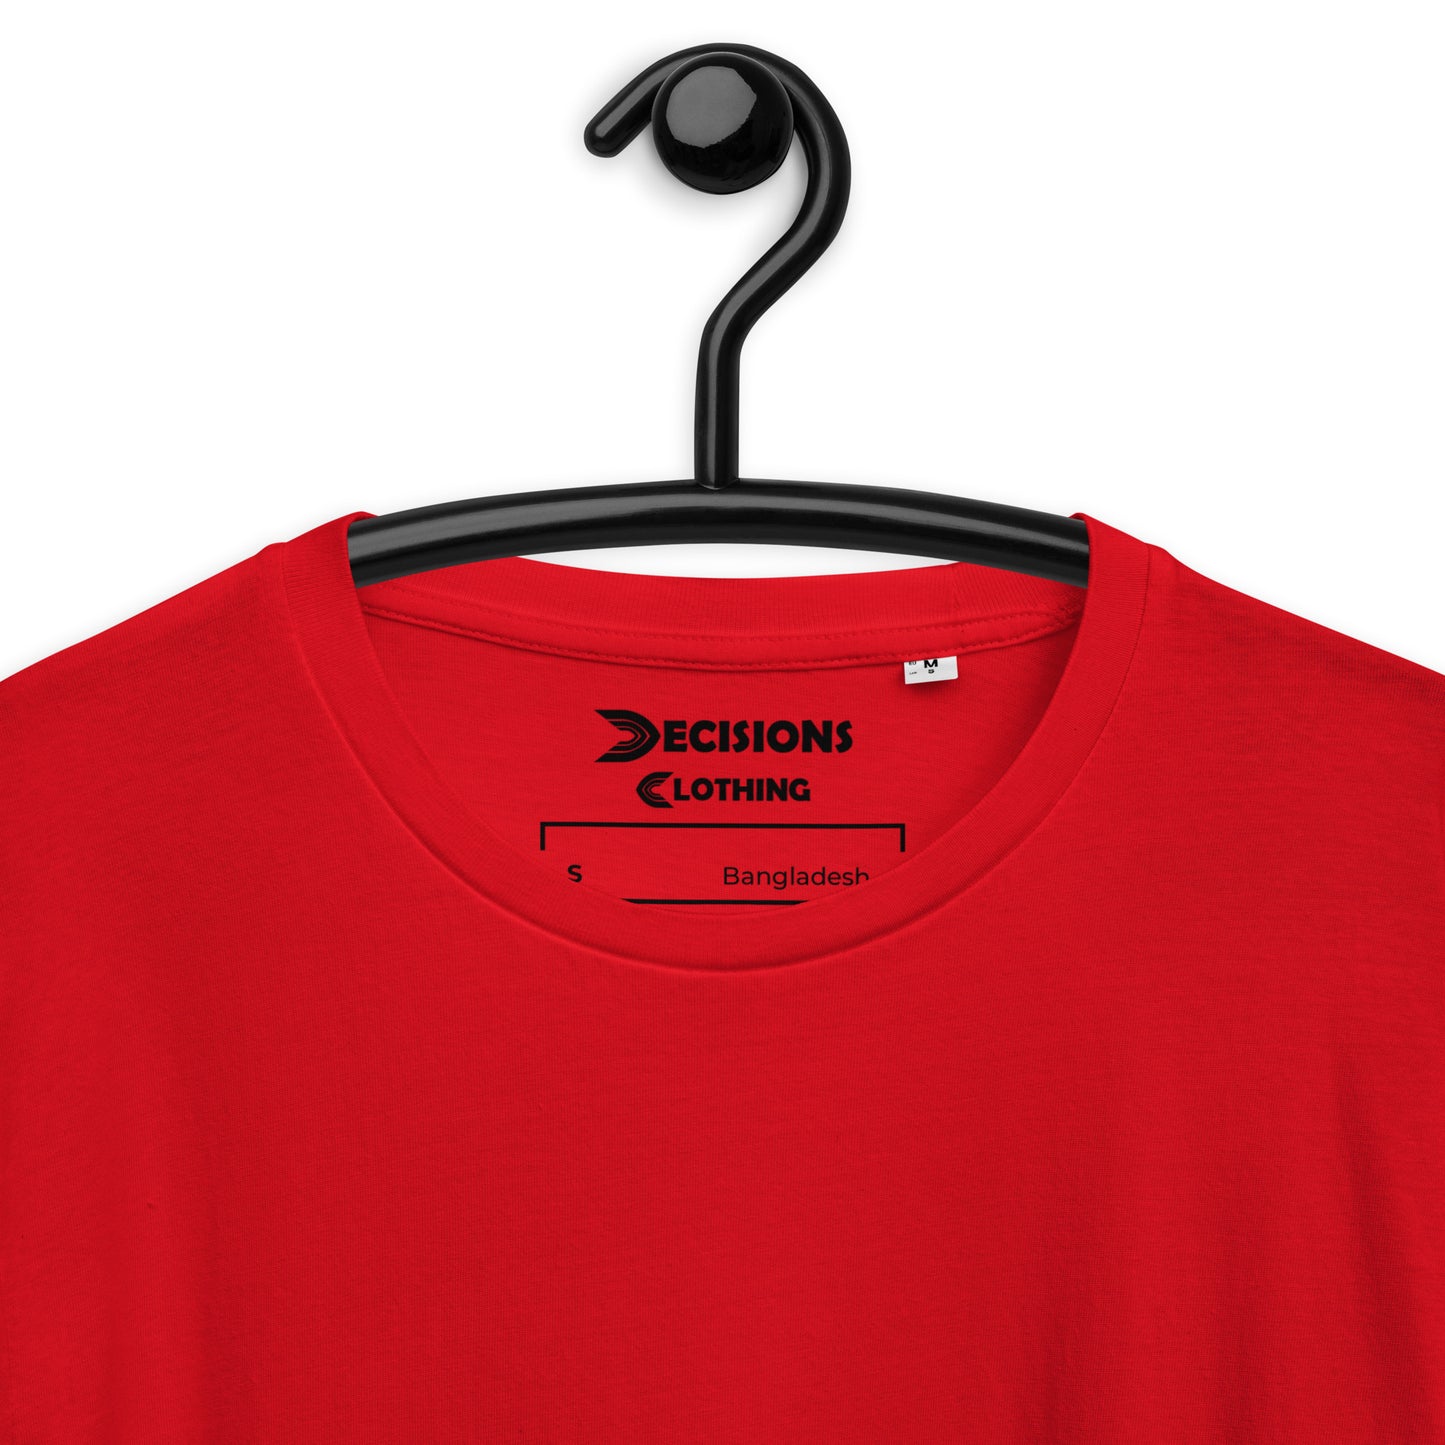 Revenant Nessie T-Shirt (Apex Legends)